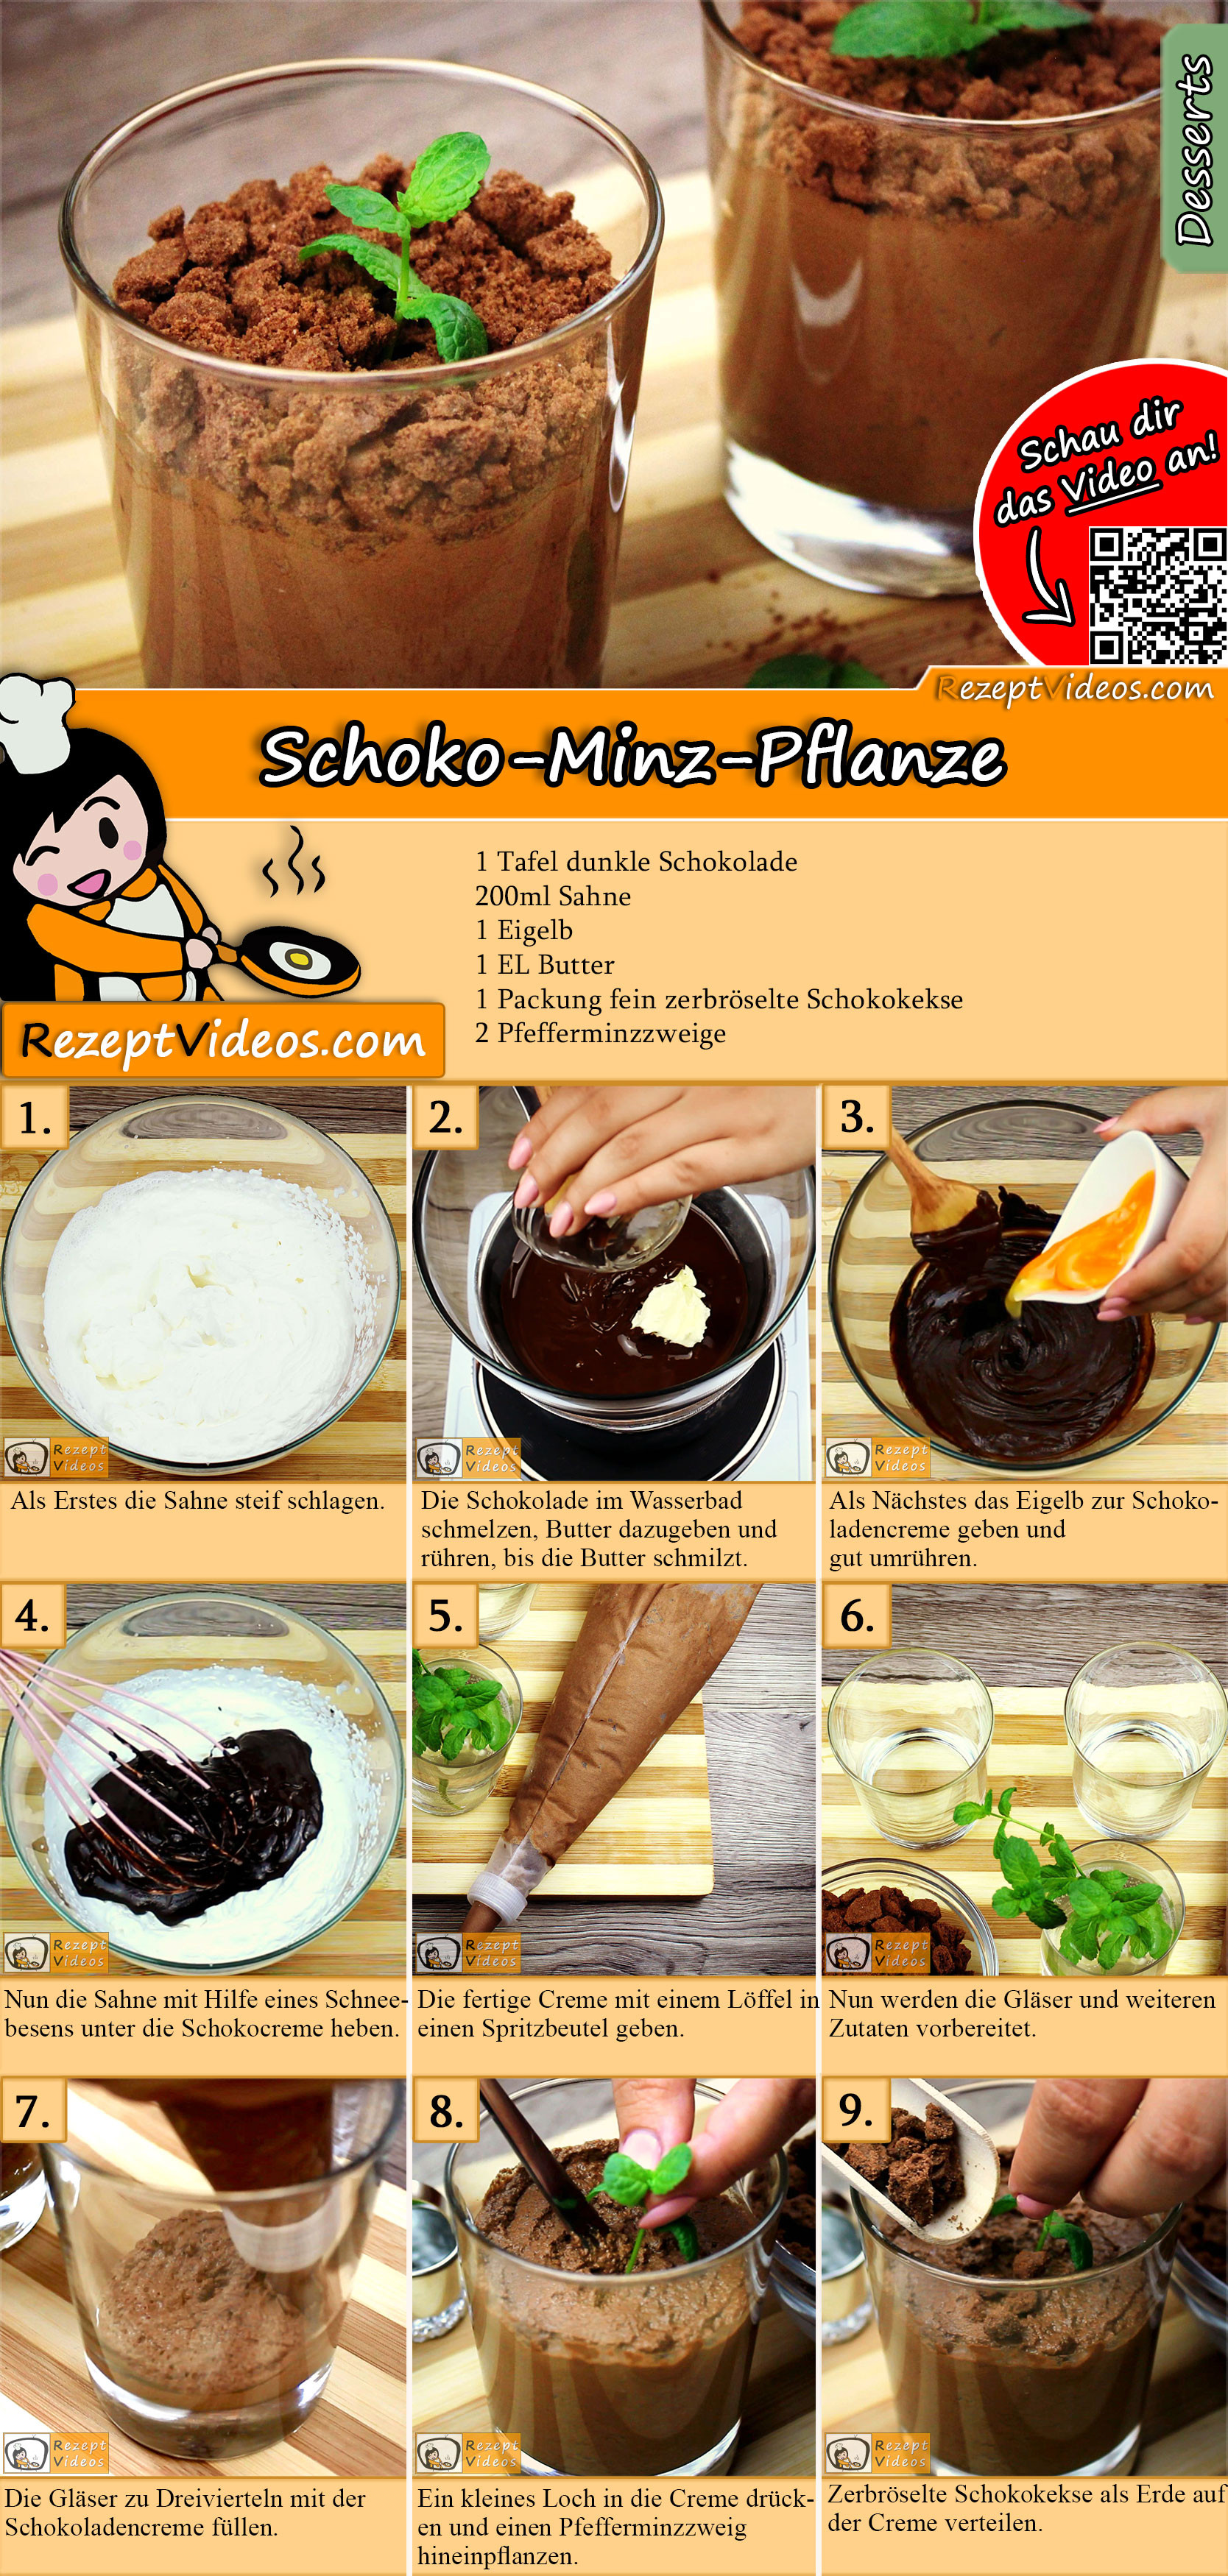 Schoko-Minz-Pflanze Rezept mit Video